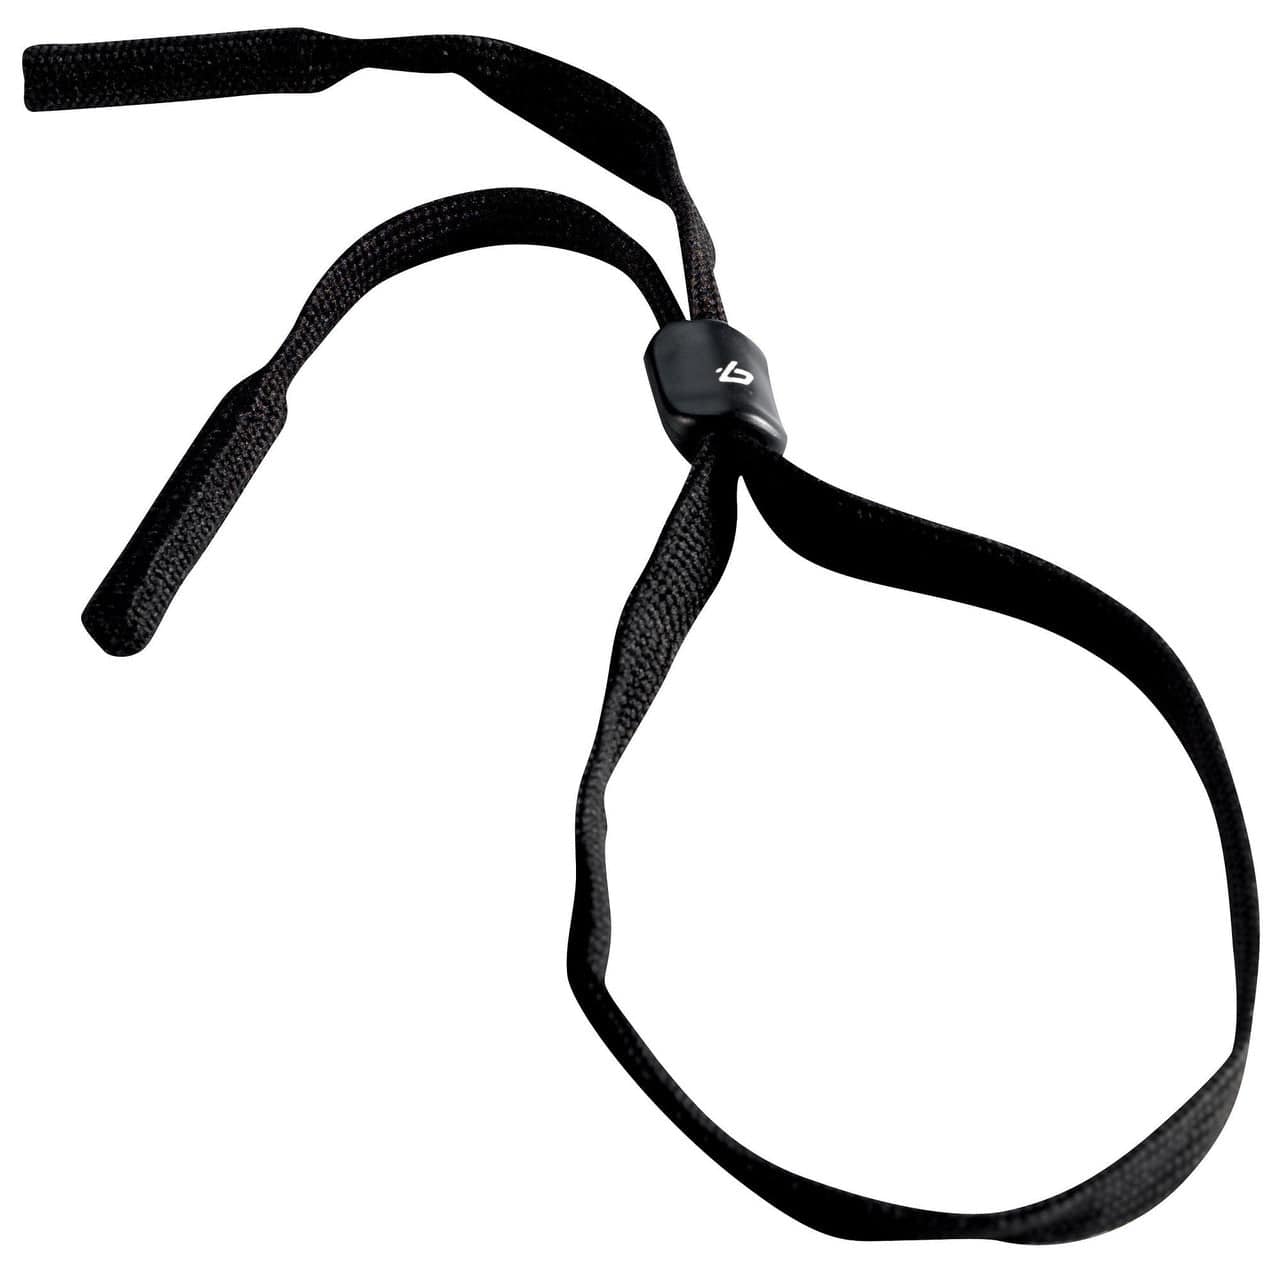 Bolle Hustler 40151 Polarized Safety Glasses Adjustable Retainer